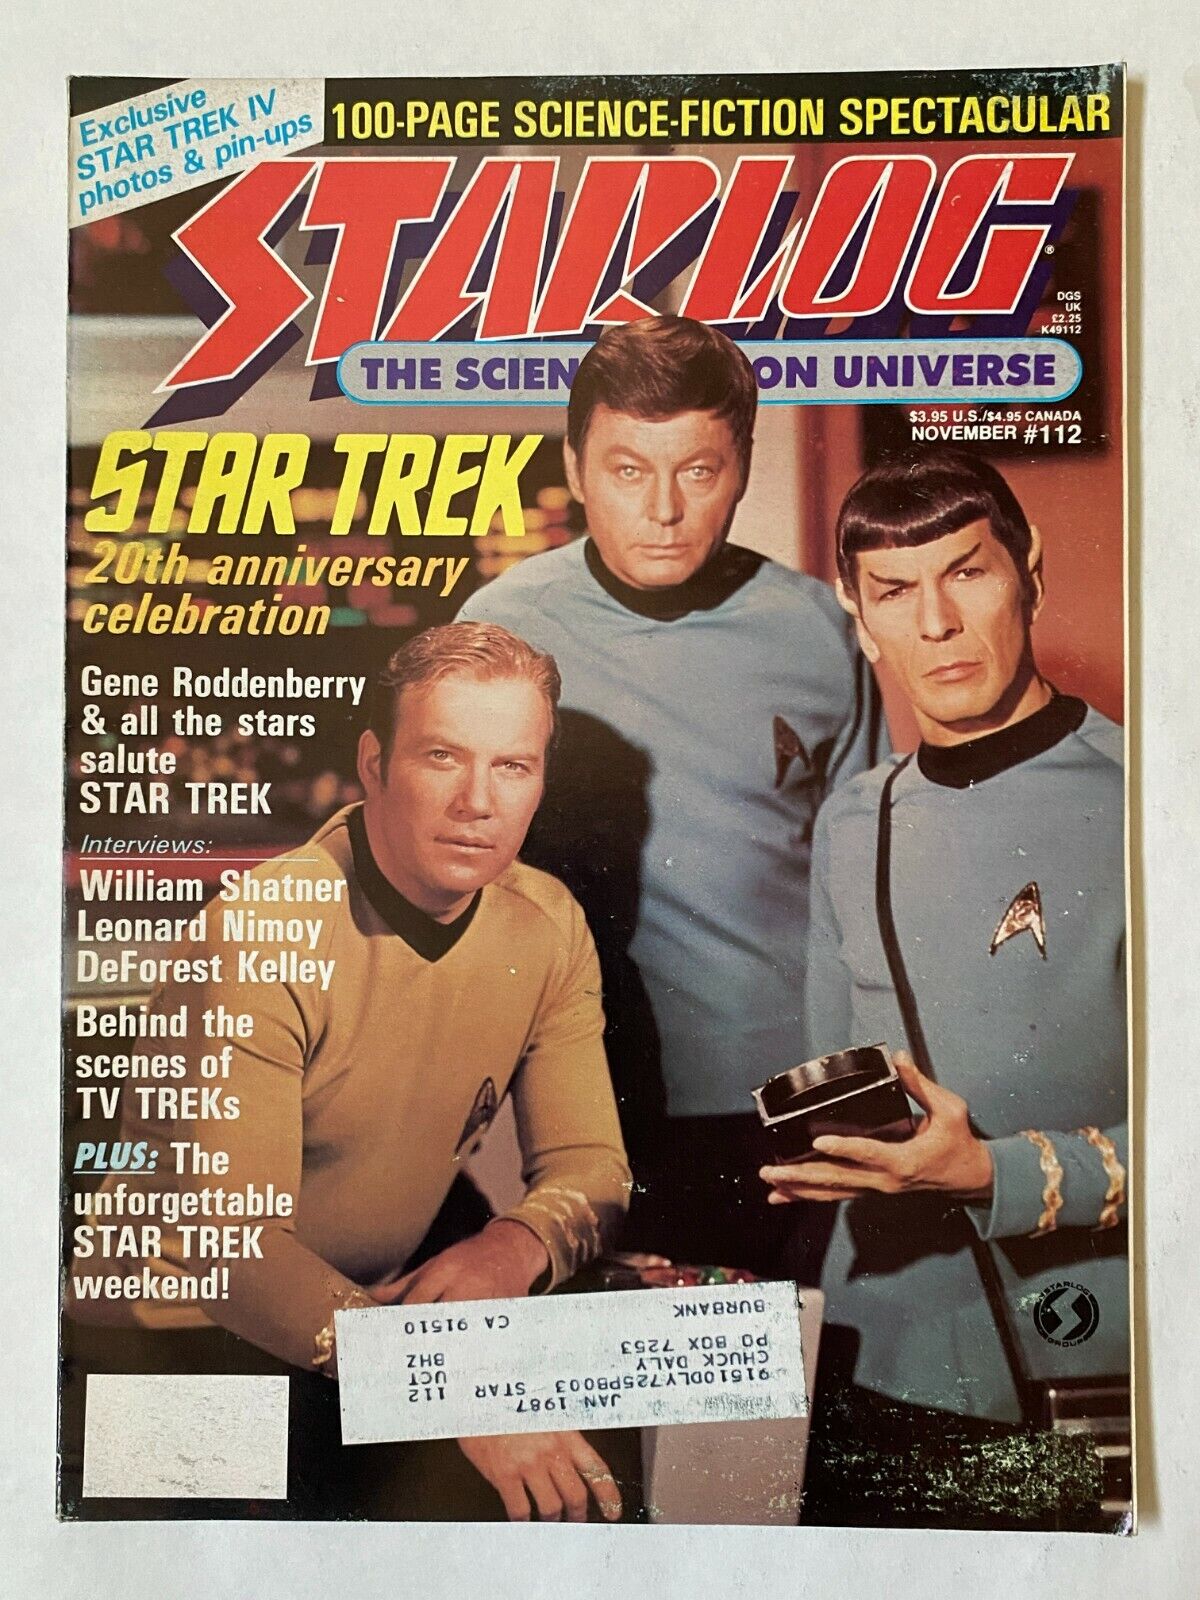 STARLOG #112 - 1986 November Featuring Star Trek On Cover VINTAGE